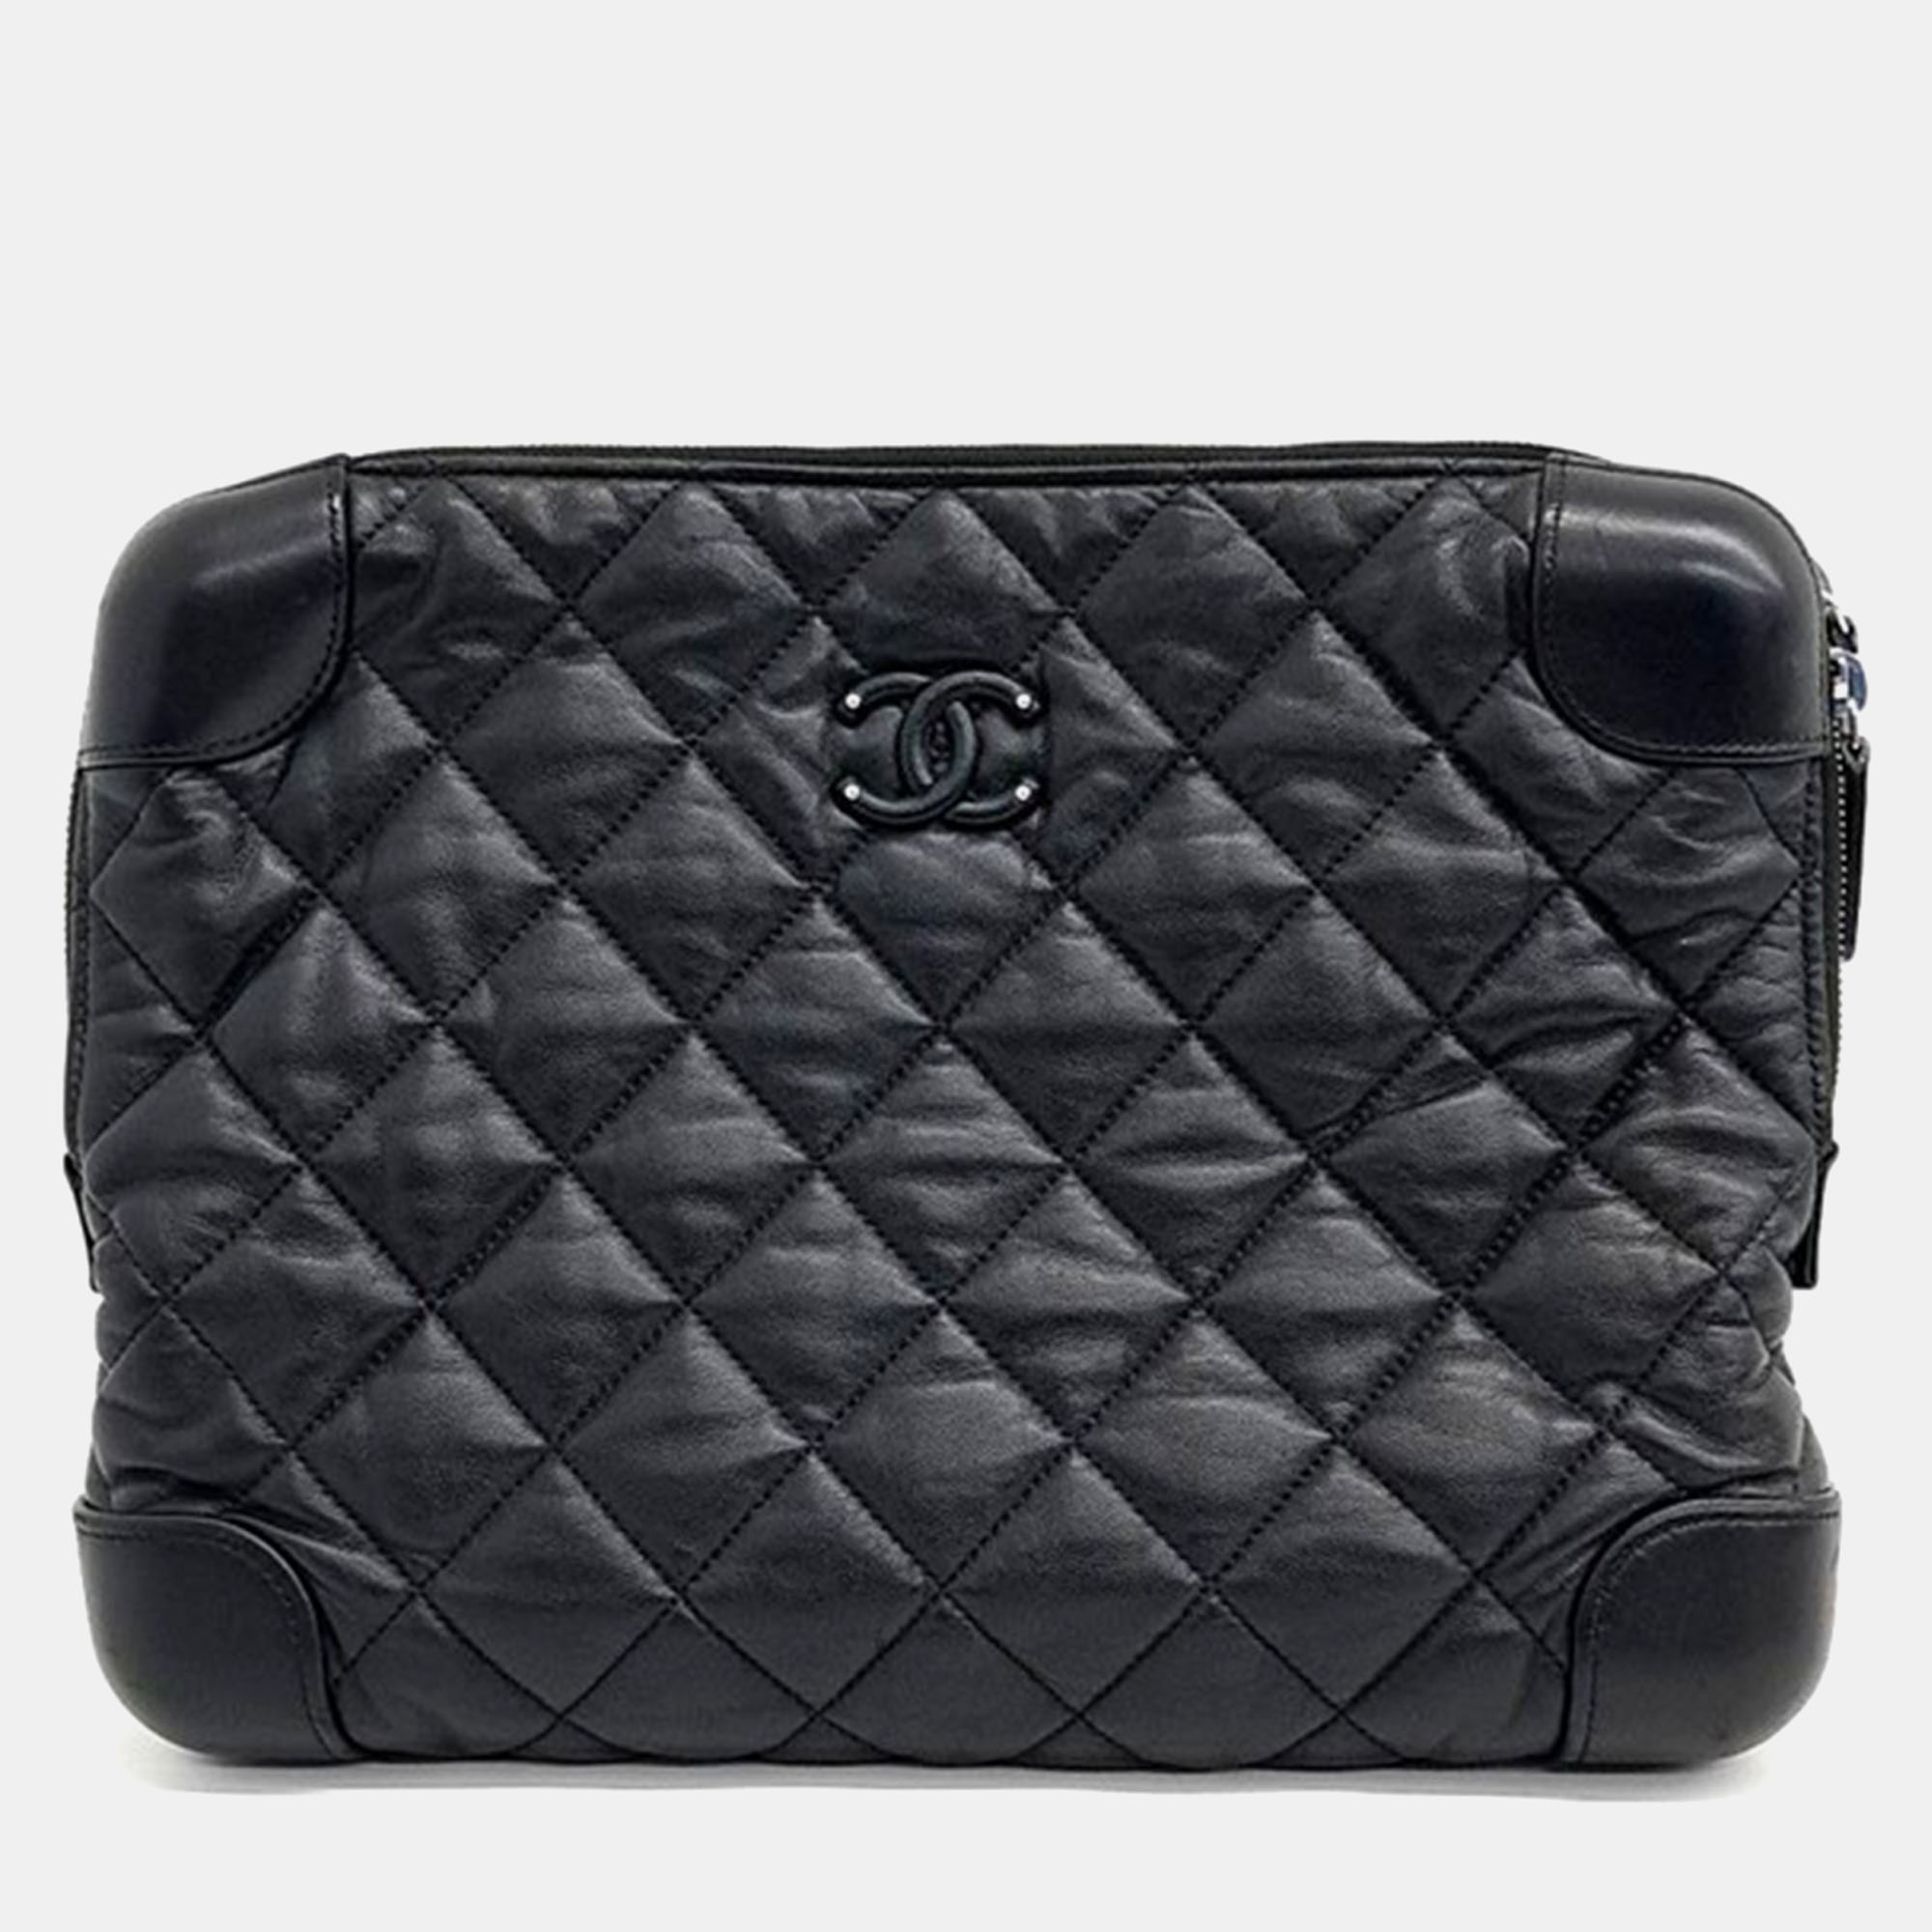 

Chanel Black Leather Clutch Bag